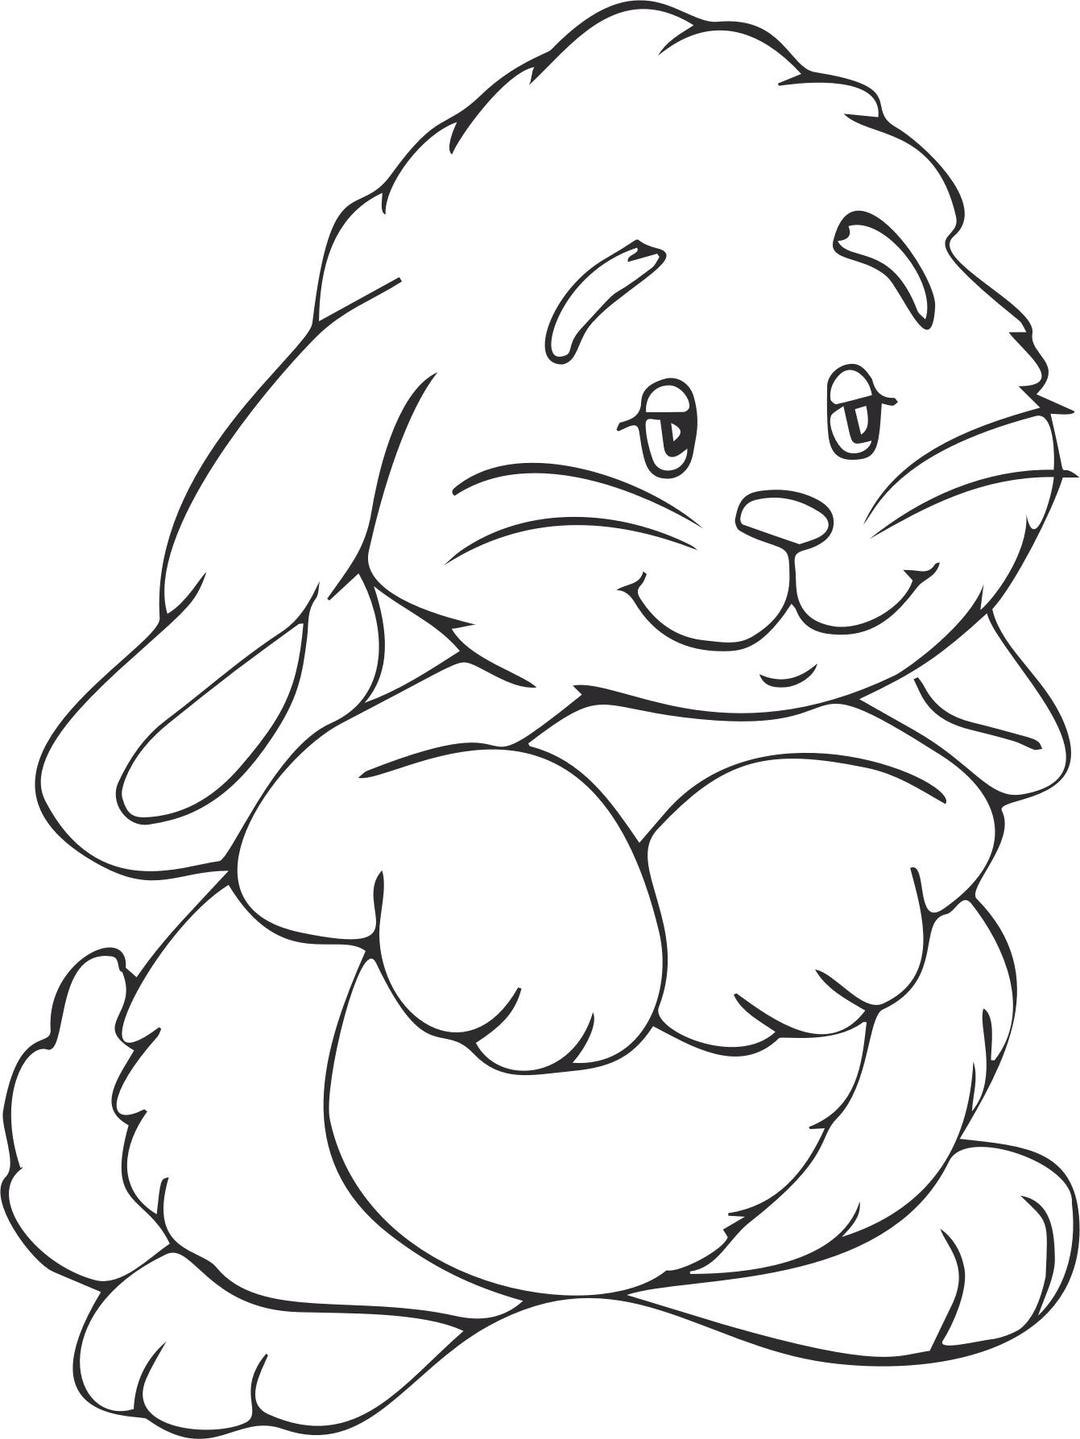 bunny outline png transparent